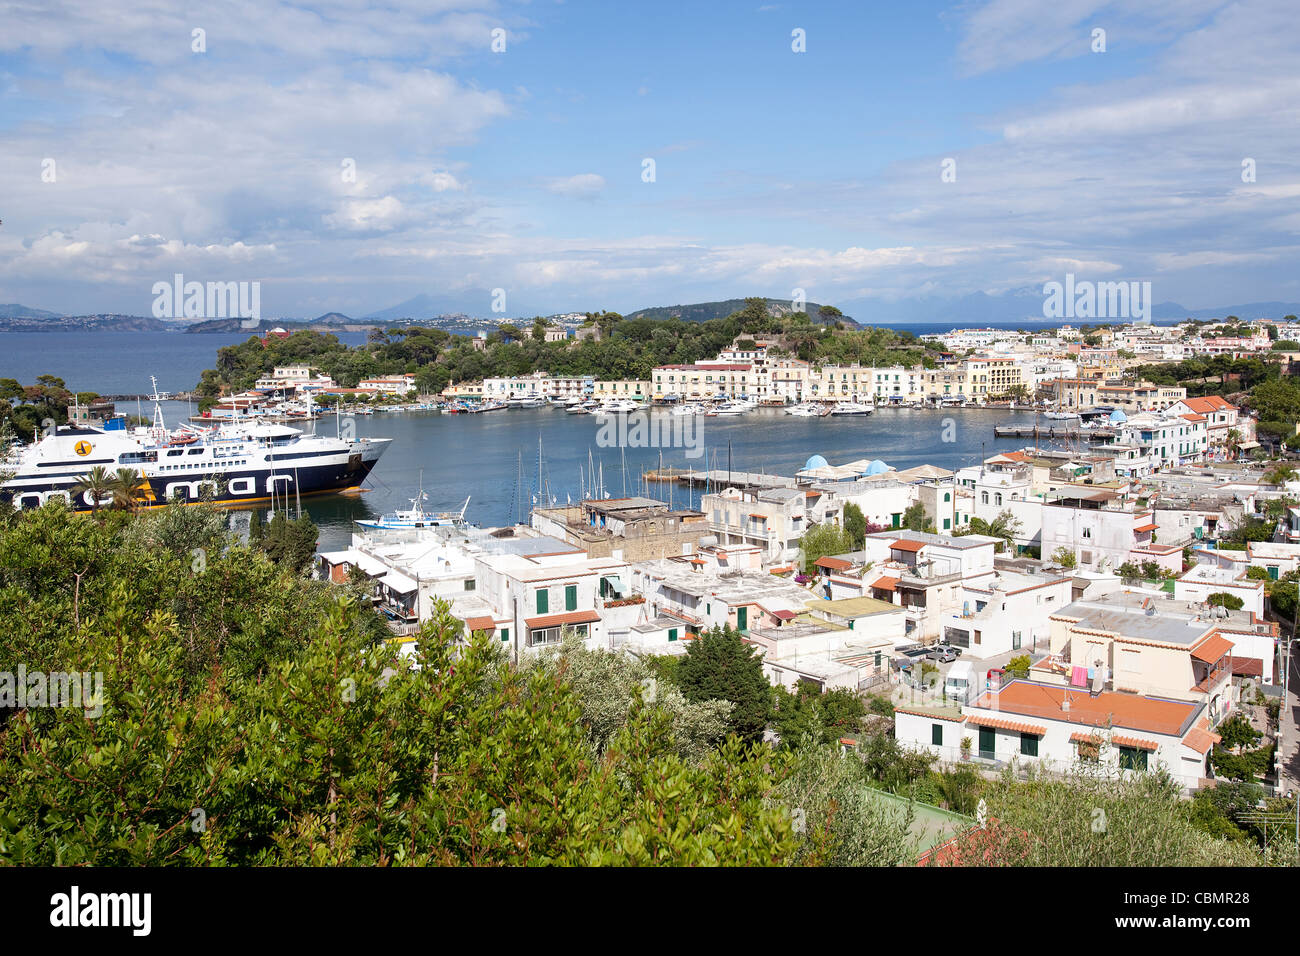 View of Ischa Harbour, Campania, Mediterranean Sea, Italy Stock Photo